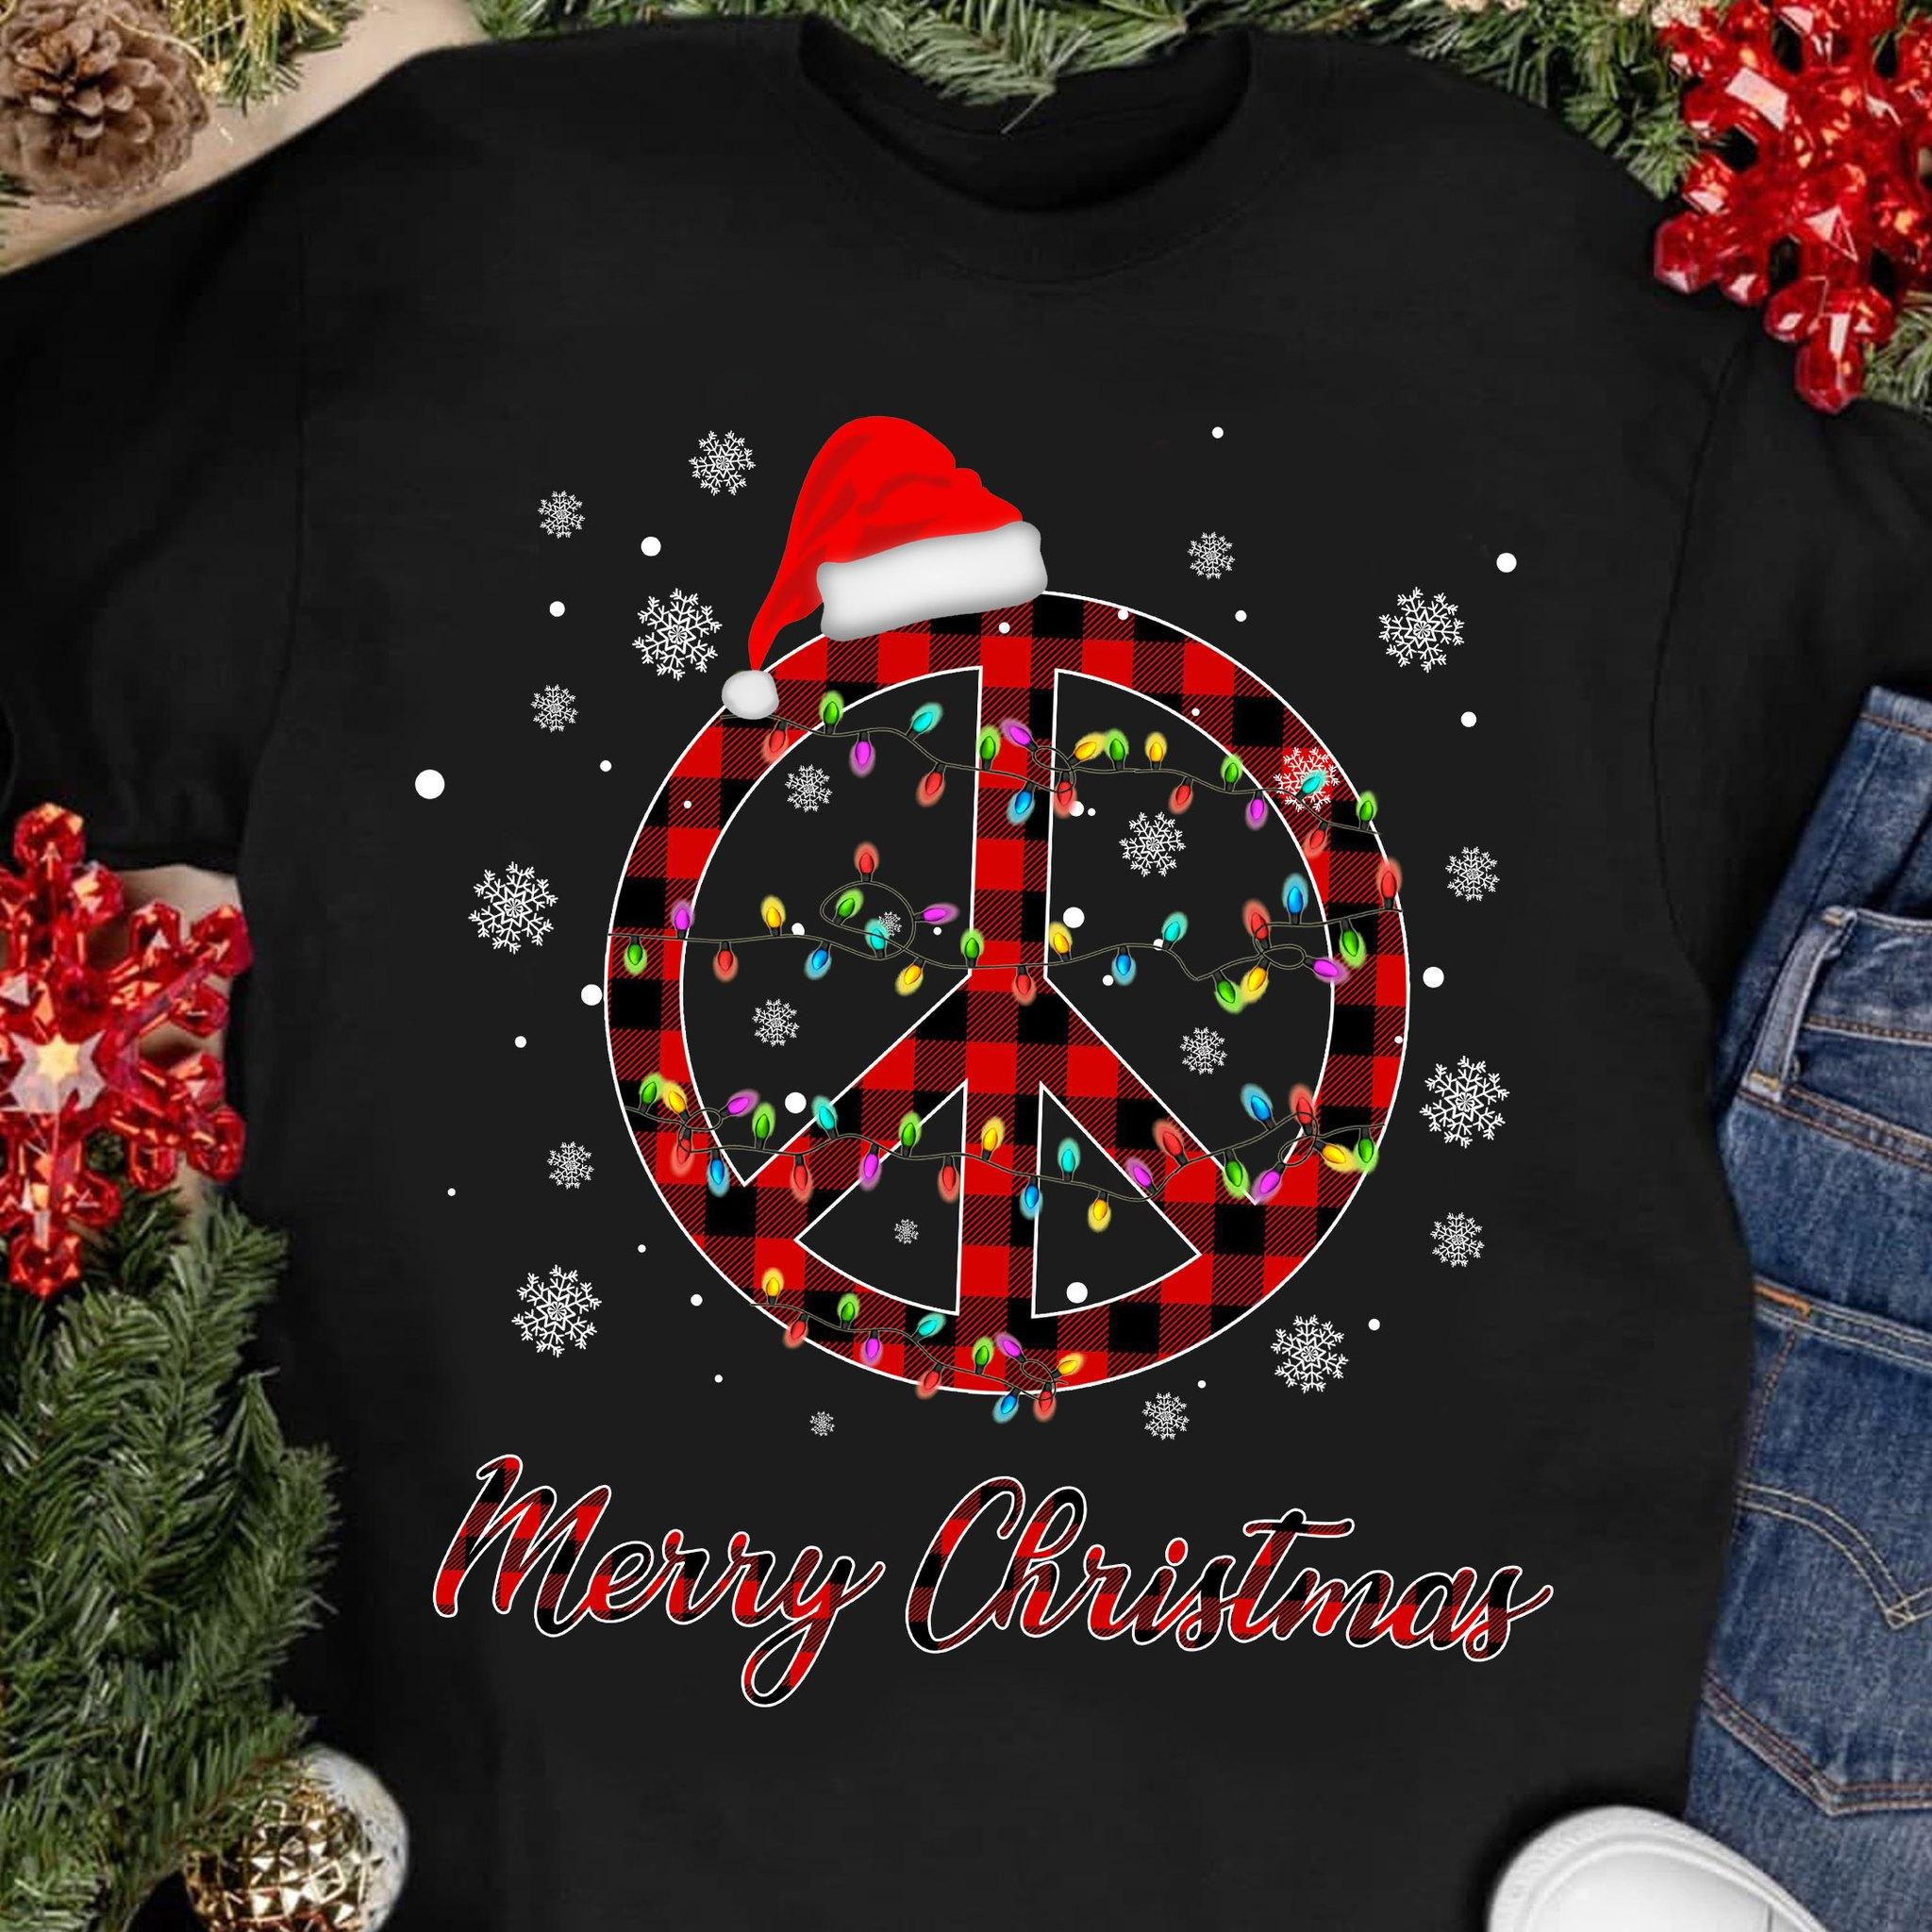 Merry Christmas - Hope for peaceful life, Christmas ugly sweater